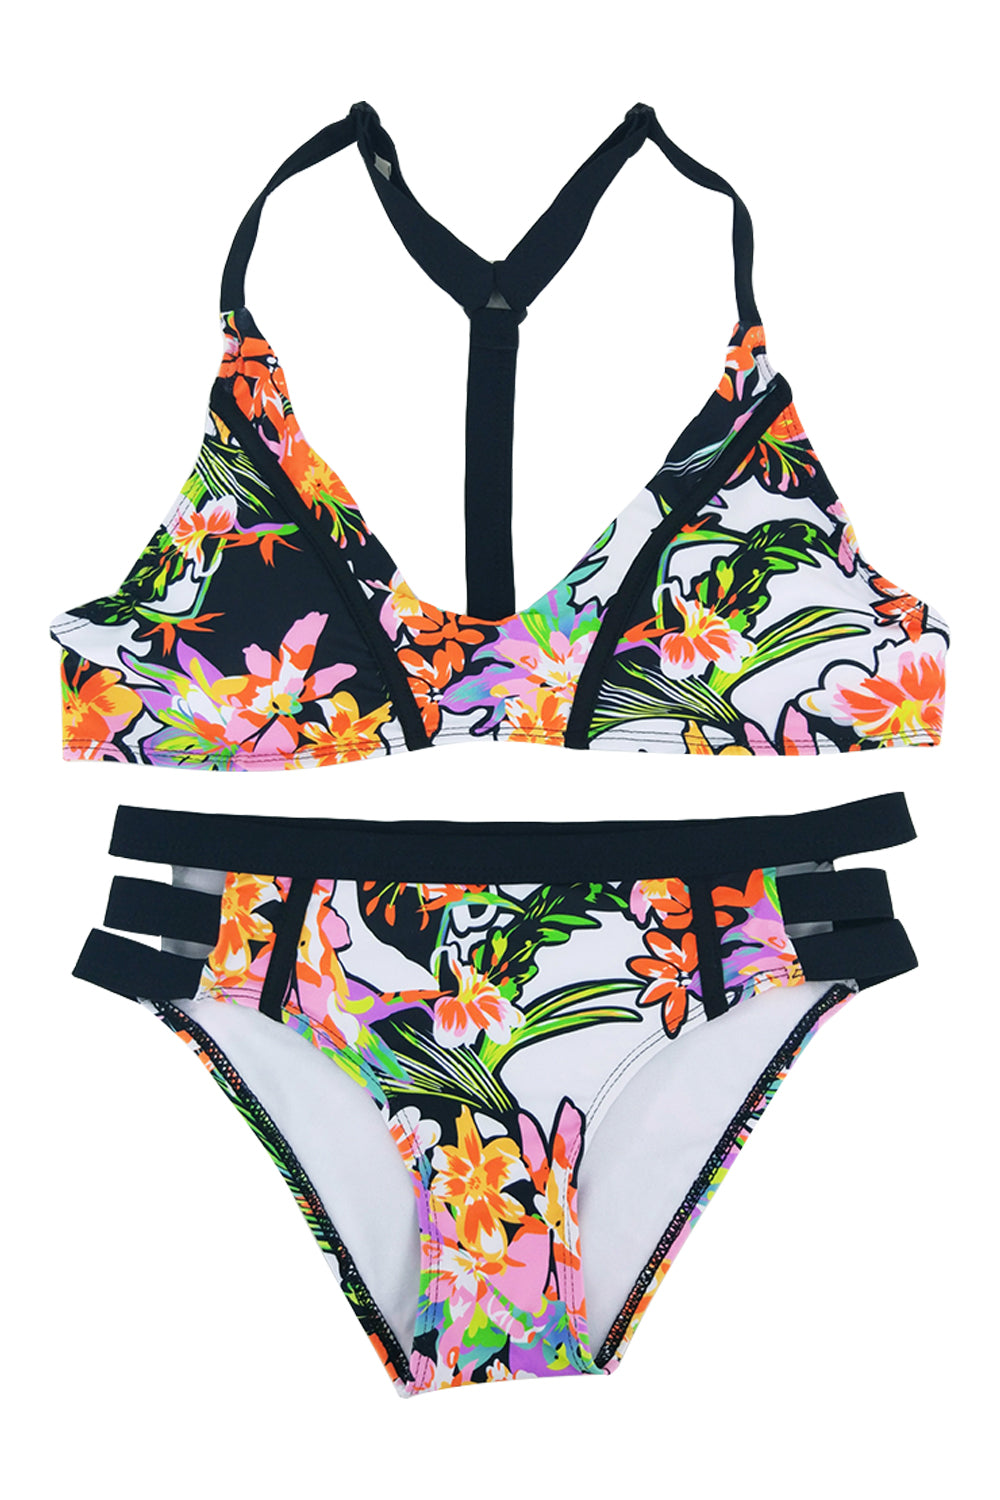 Iyasson Floral Printing Bikini Set